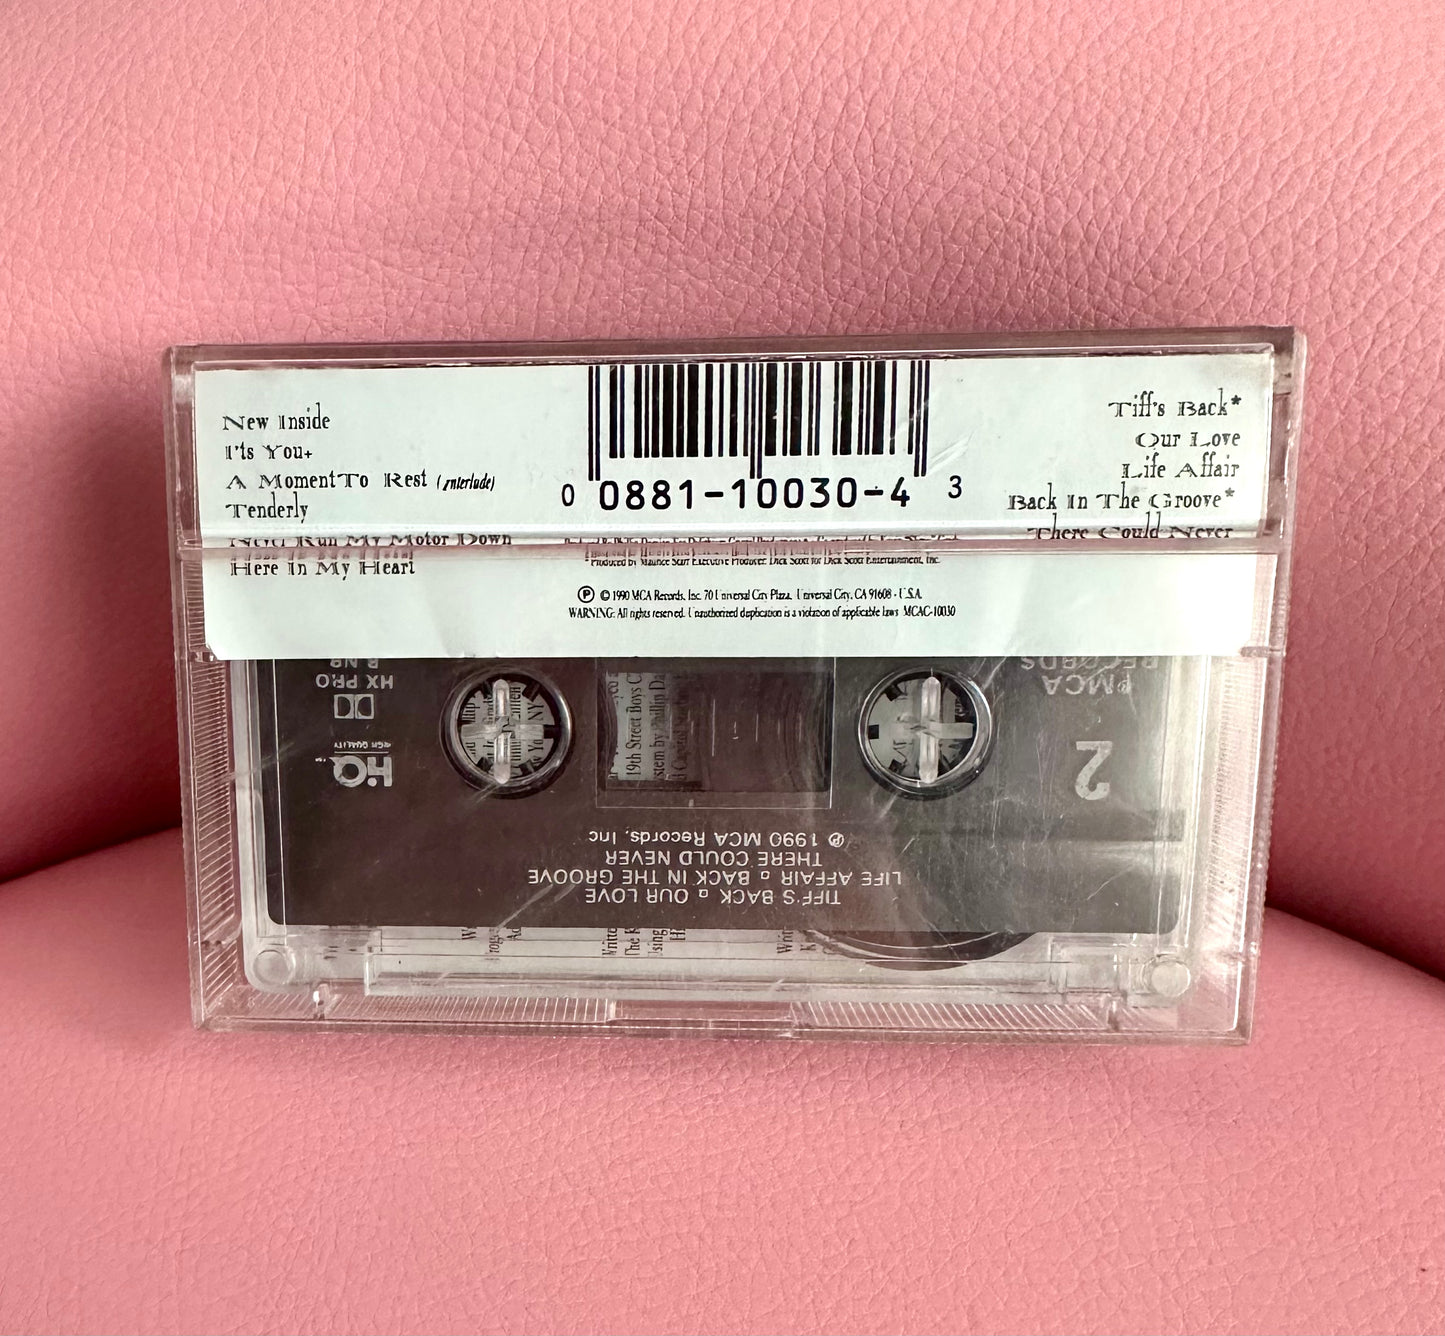 Amy Grant Heart In Motion Cassette Tape